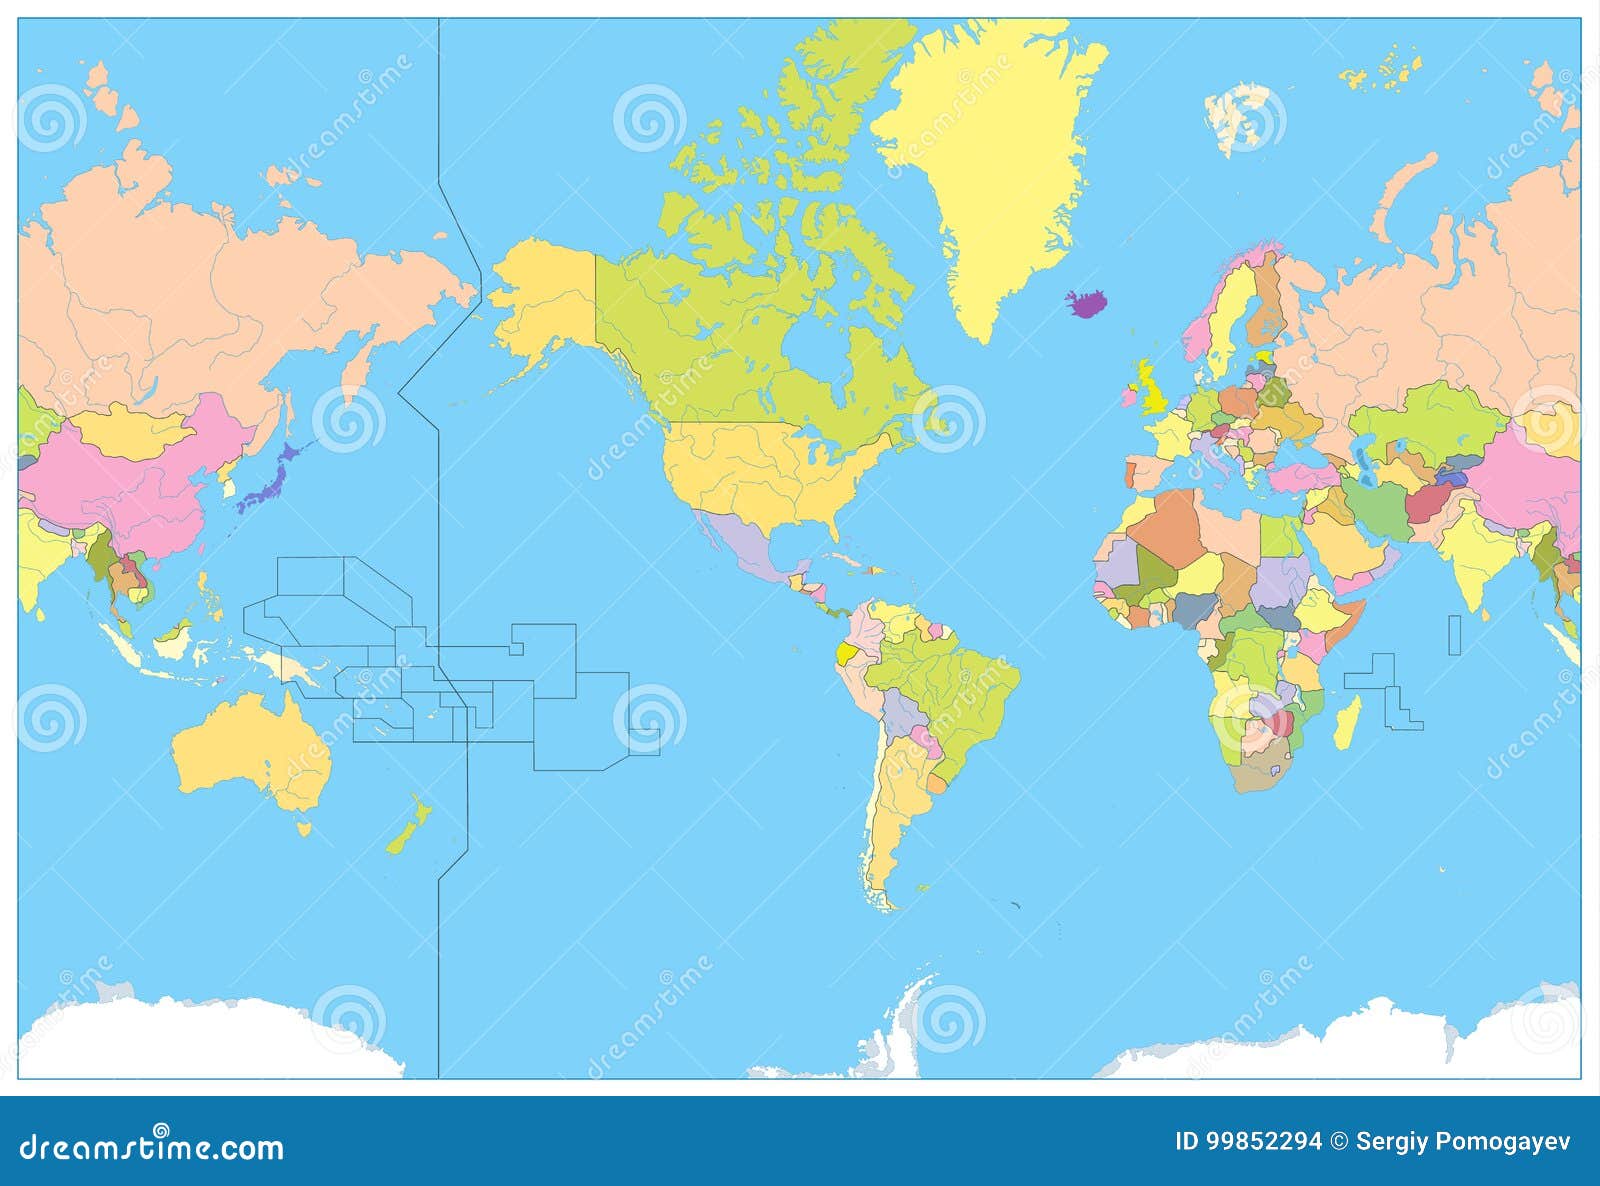 America Centered Political World Map No Text Stock Vector